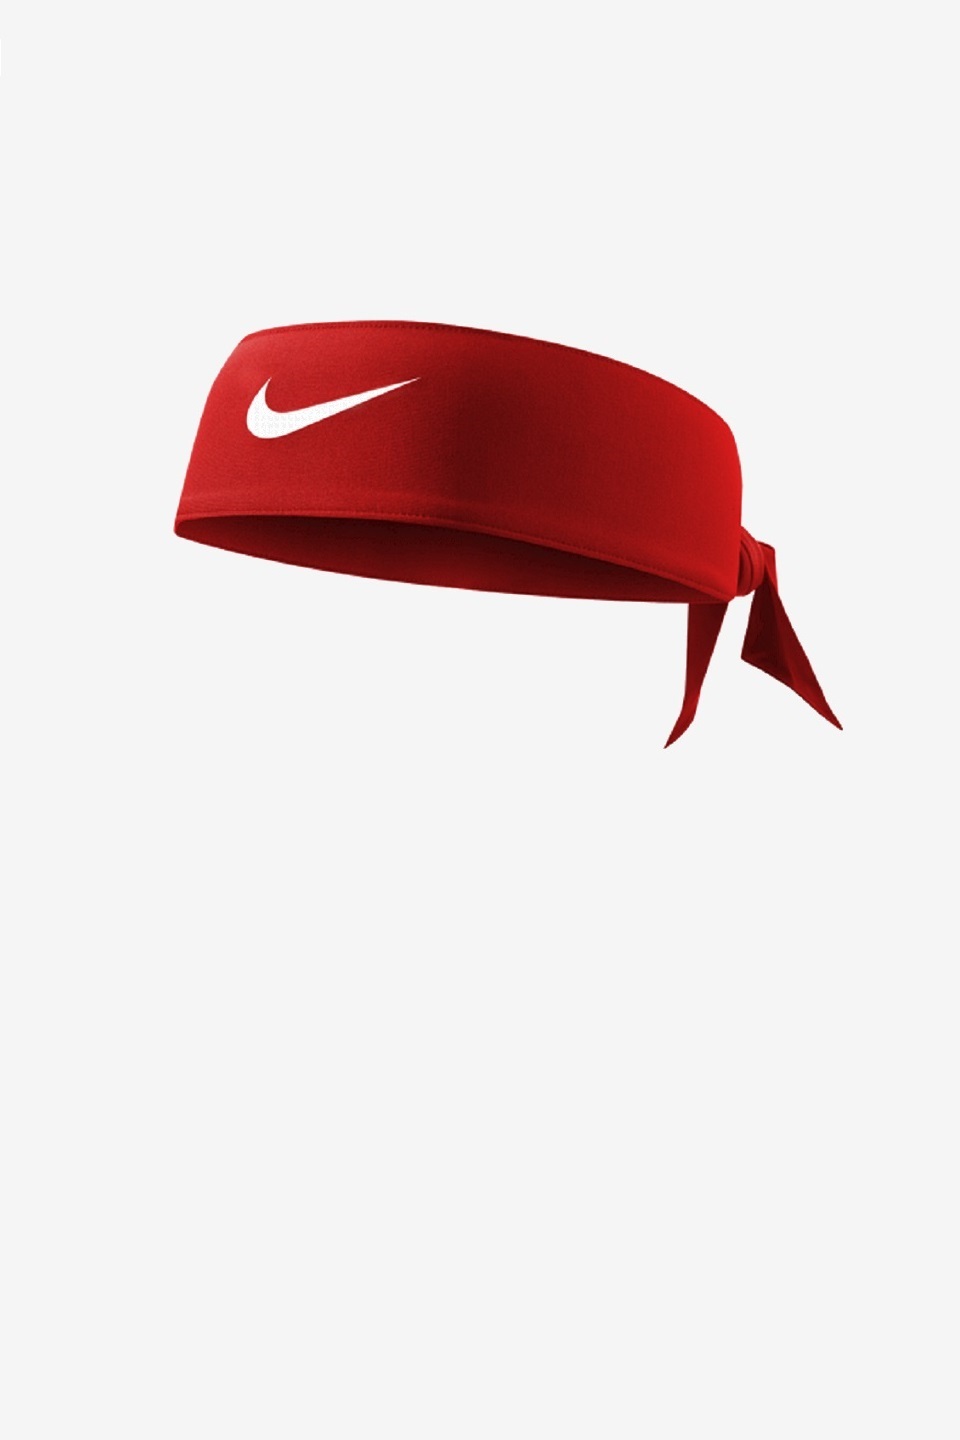 NIKE - Nike Dri-Fit Head Tie 3.0 Bandana Kırmızı